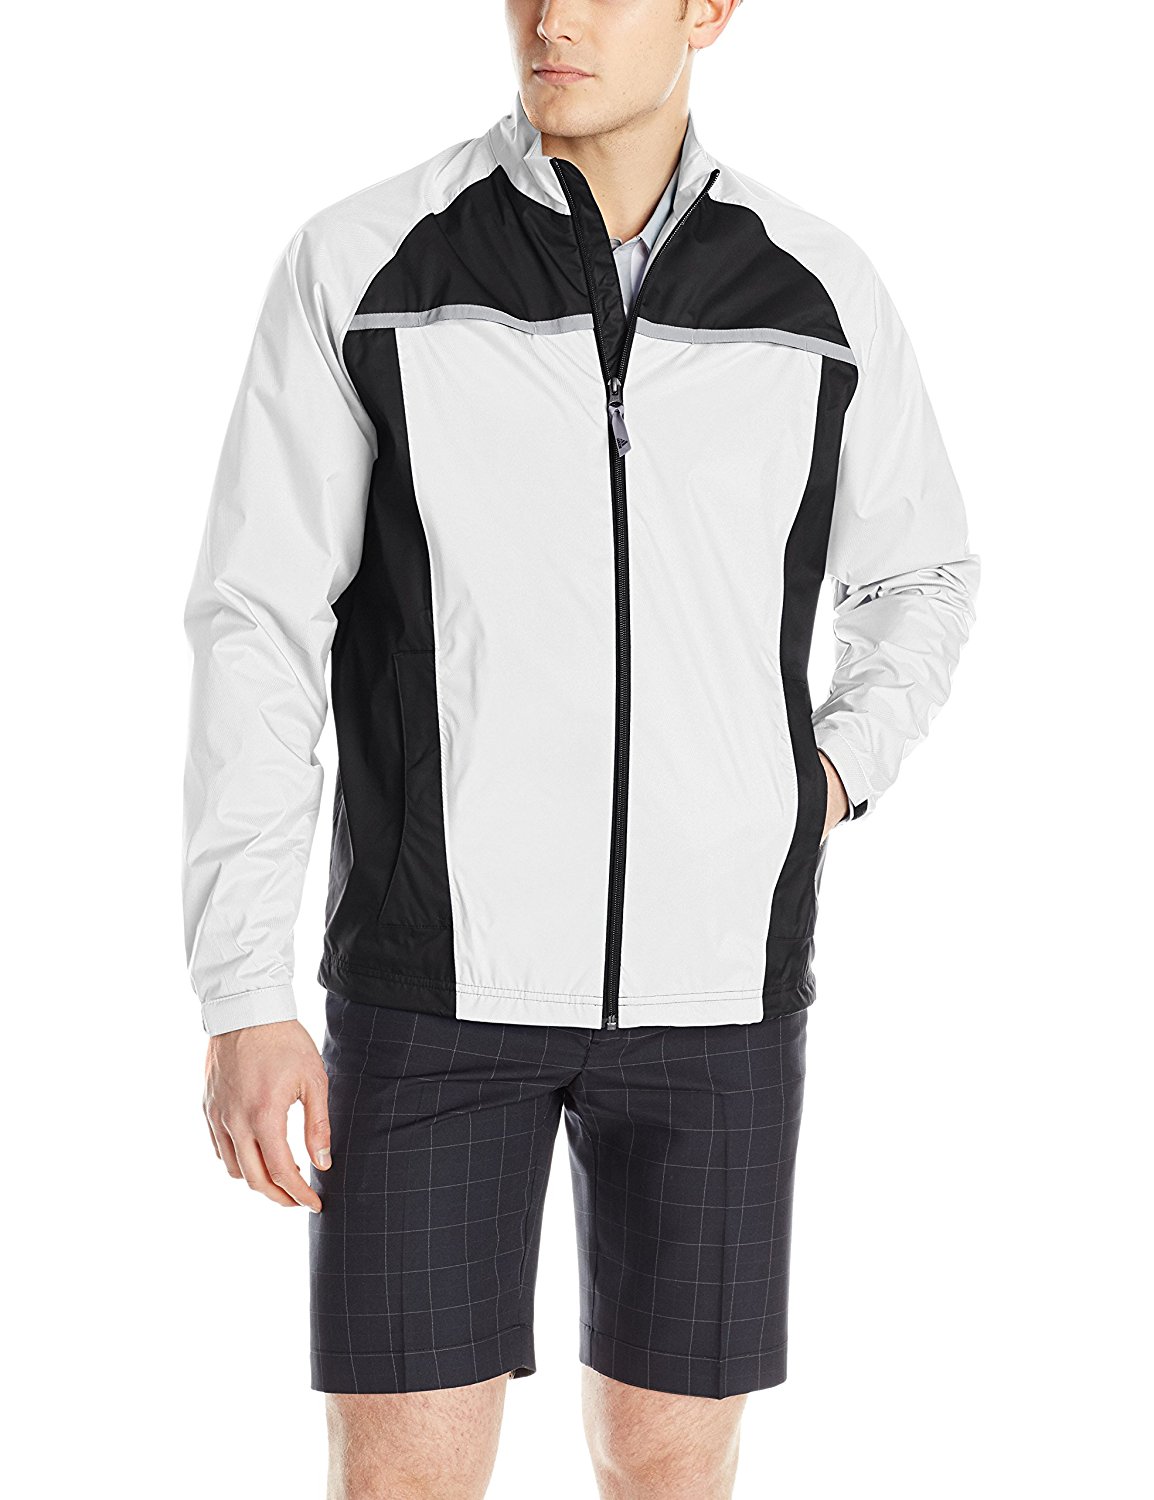 Adidas Mens ClimaStorm Essential Packable Golf Rain Jackets